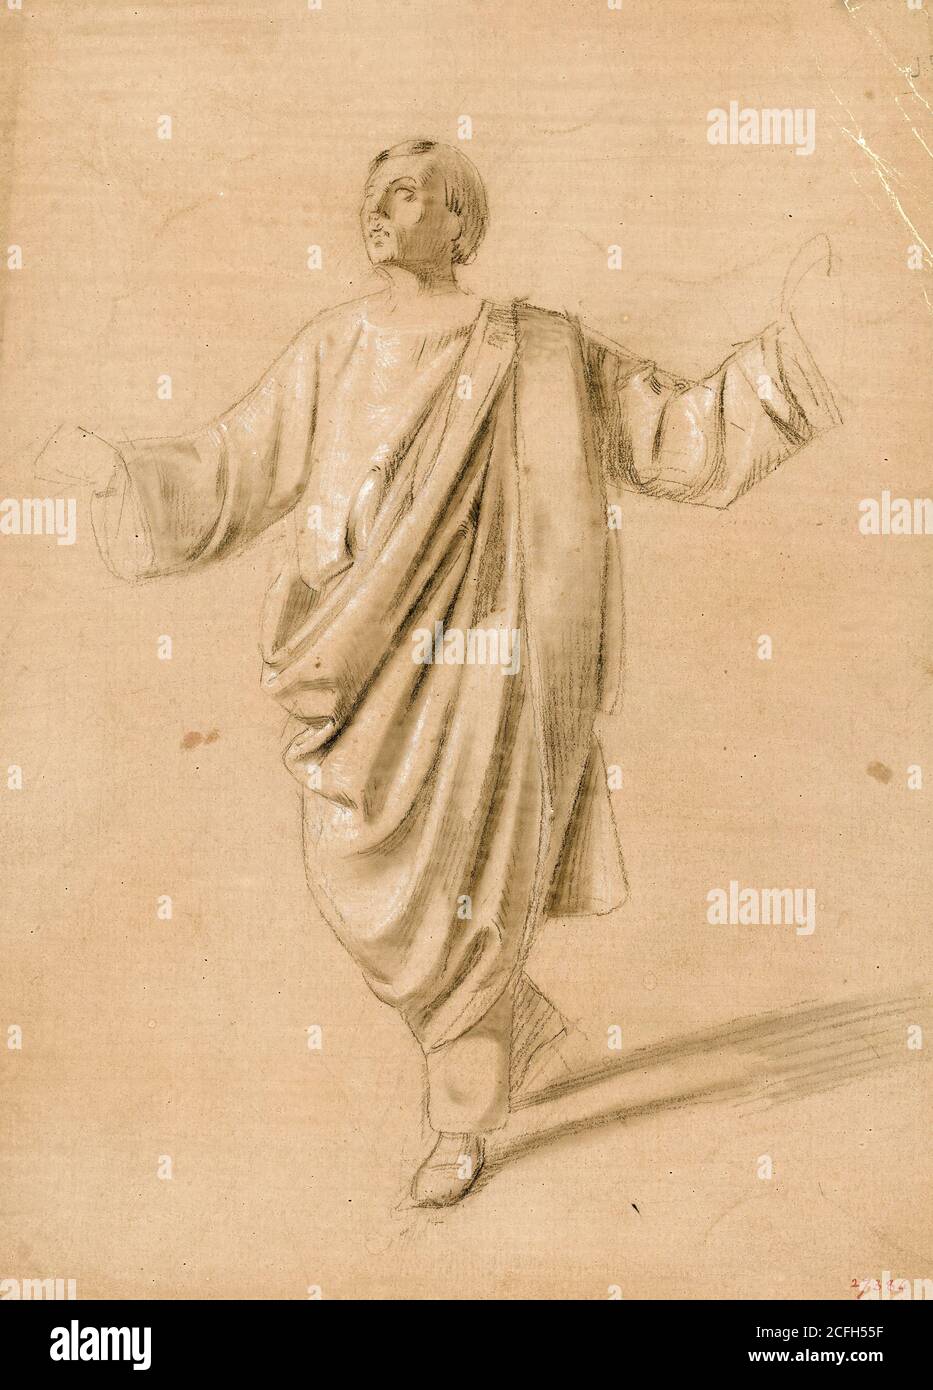 Maria Fortuny, Academic Study of a Male Figure, Circa 1856-1858, Pencil and white lead on paper, Museu Nacional d'Art de Catalunya, Barcelona, España. Foto de stock